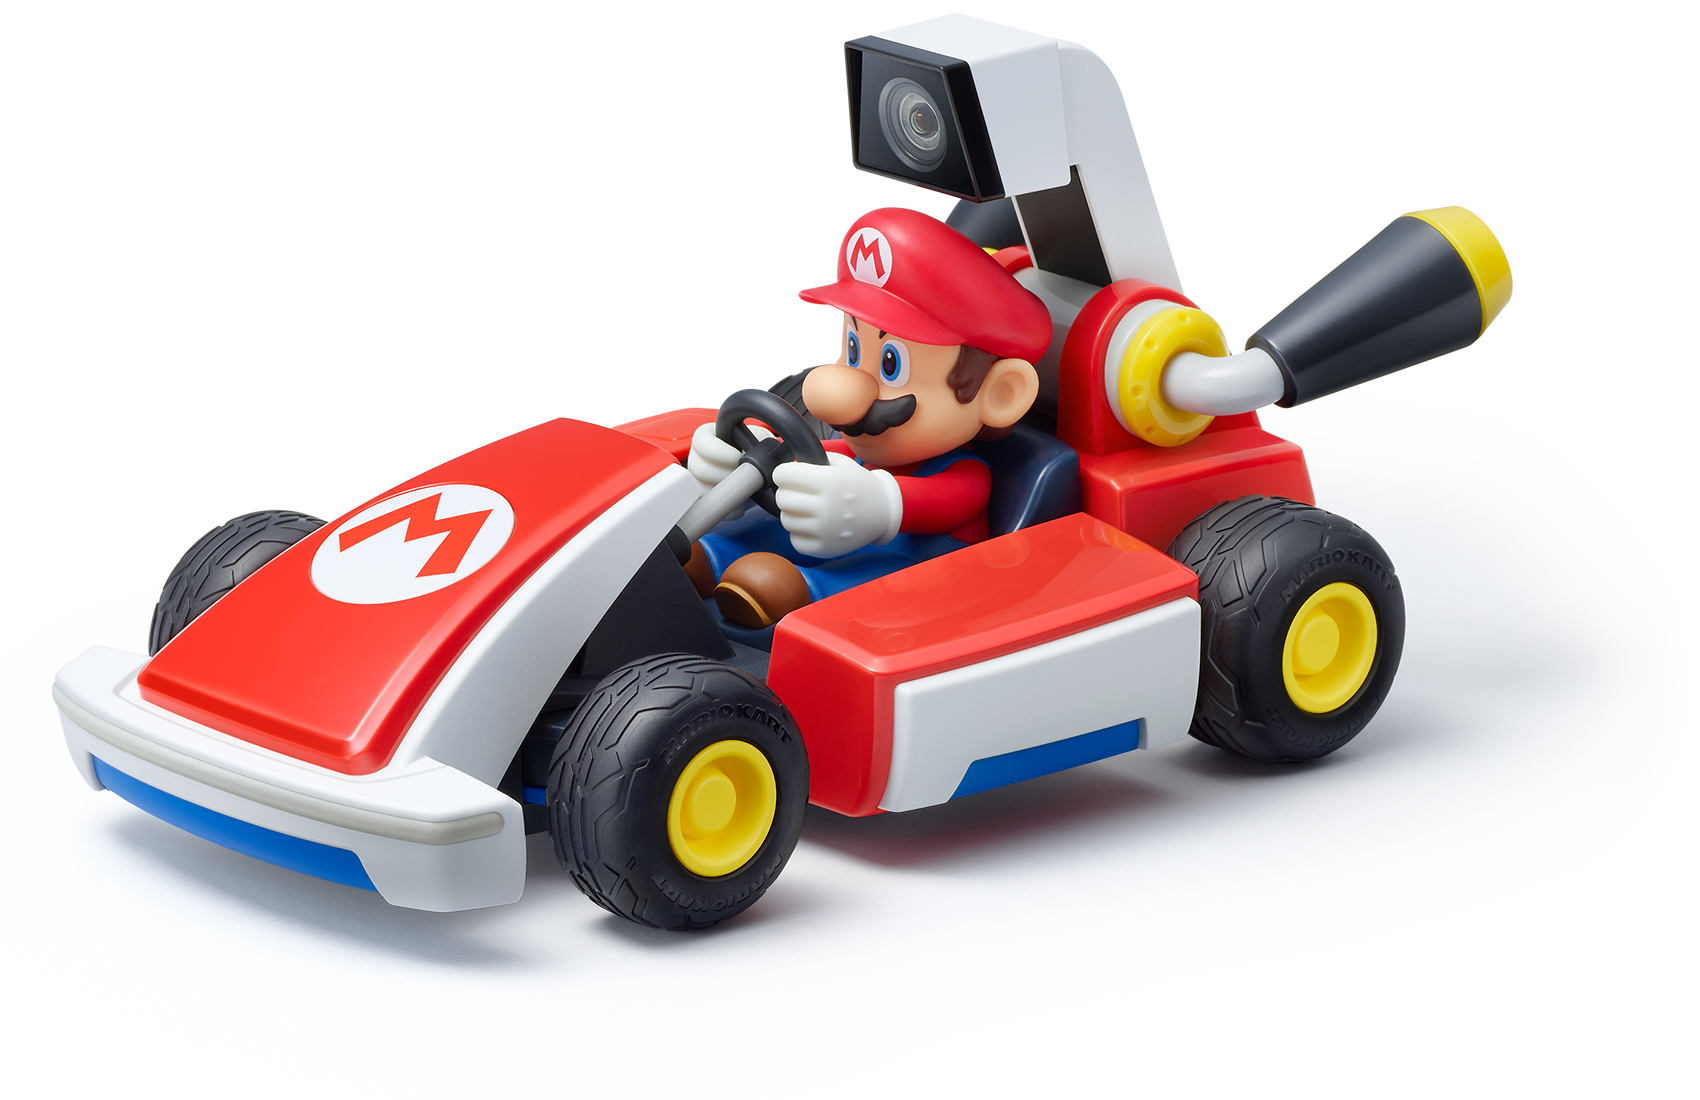 Mario kart switch gamefun